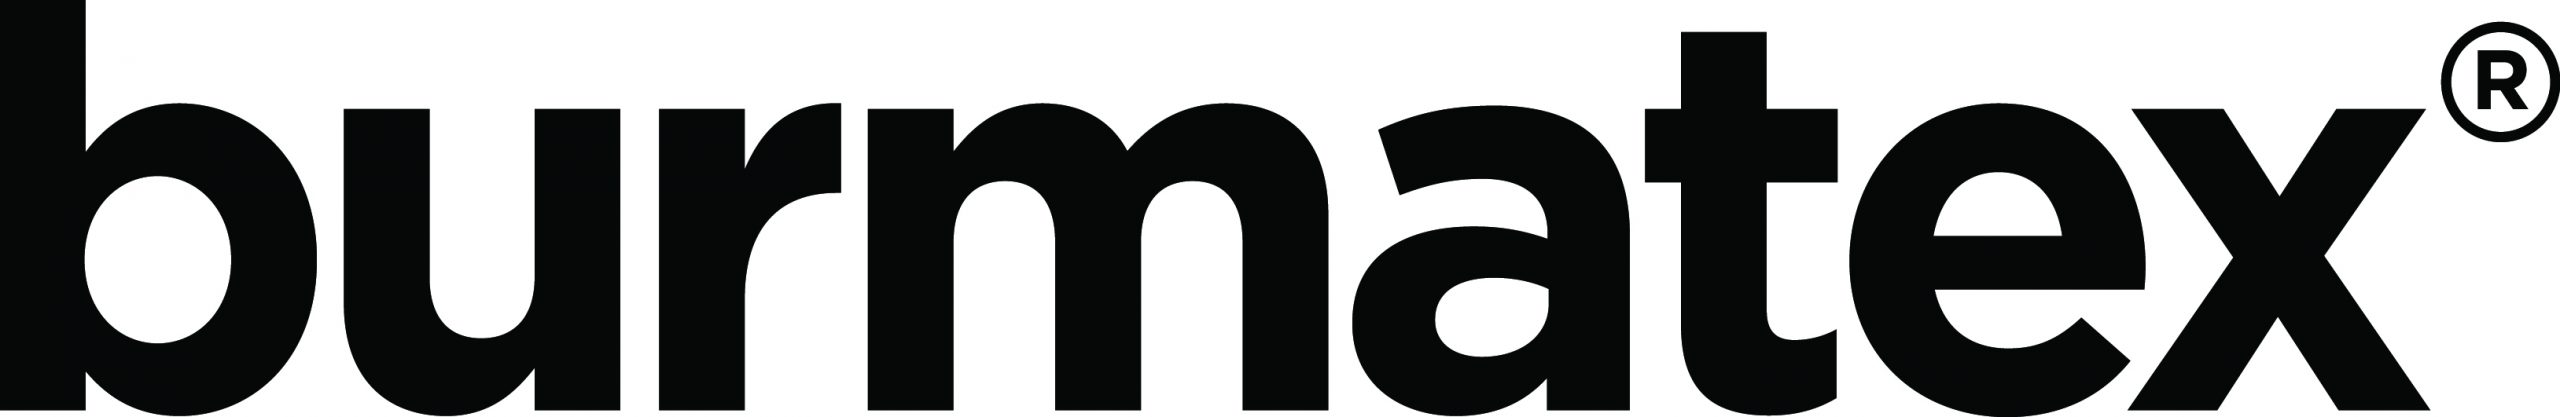 burmatex logo